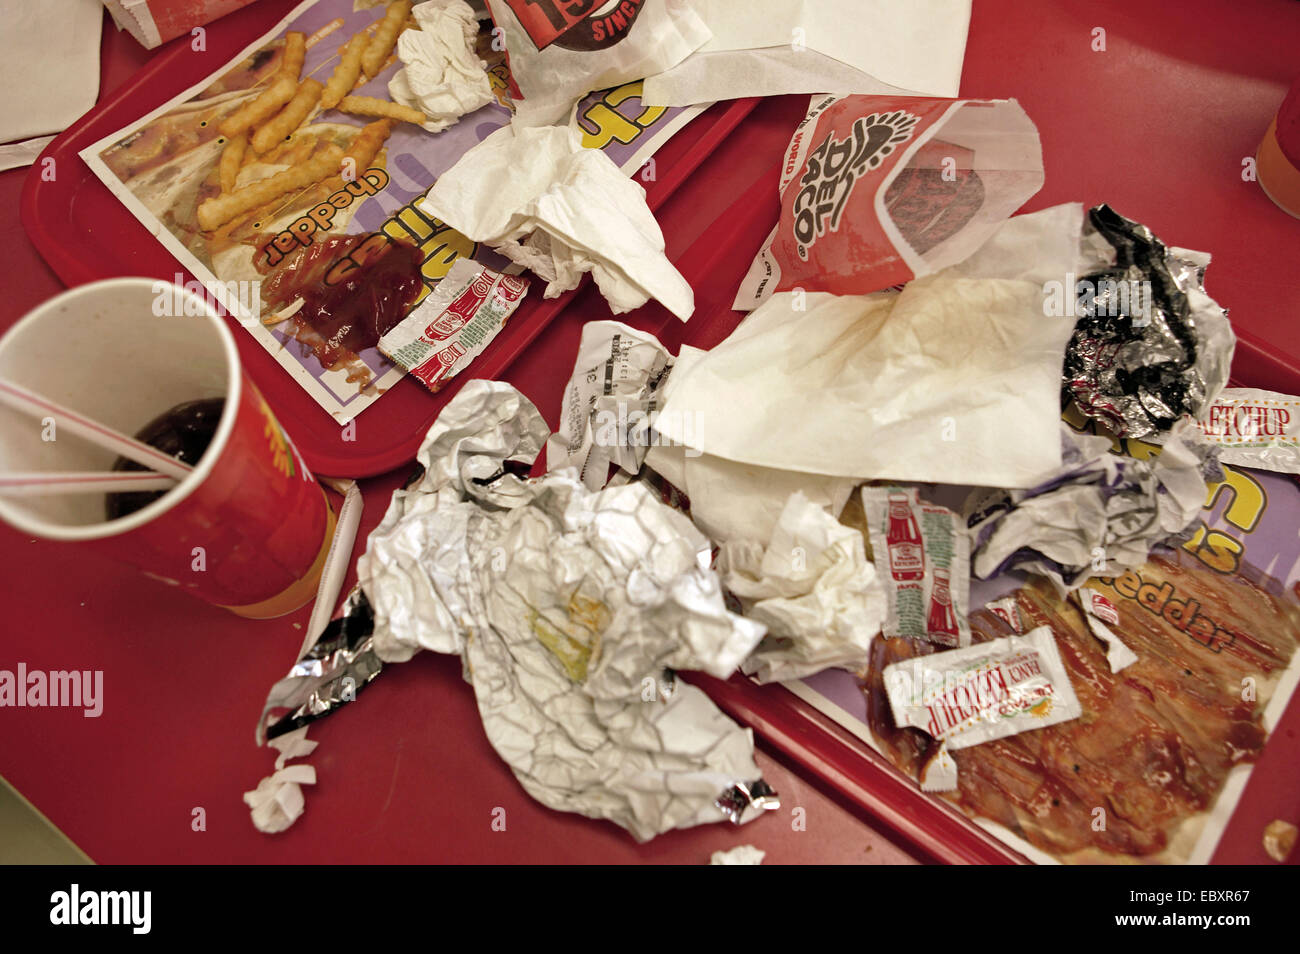 América, basura en un fastfood restaurant Foto de stock